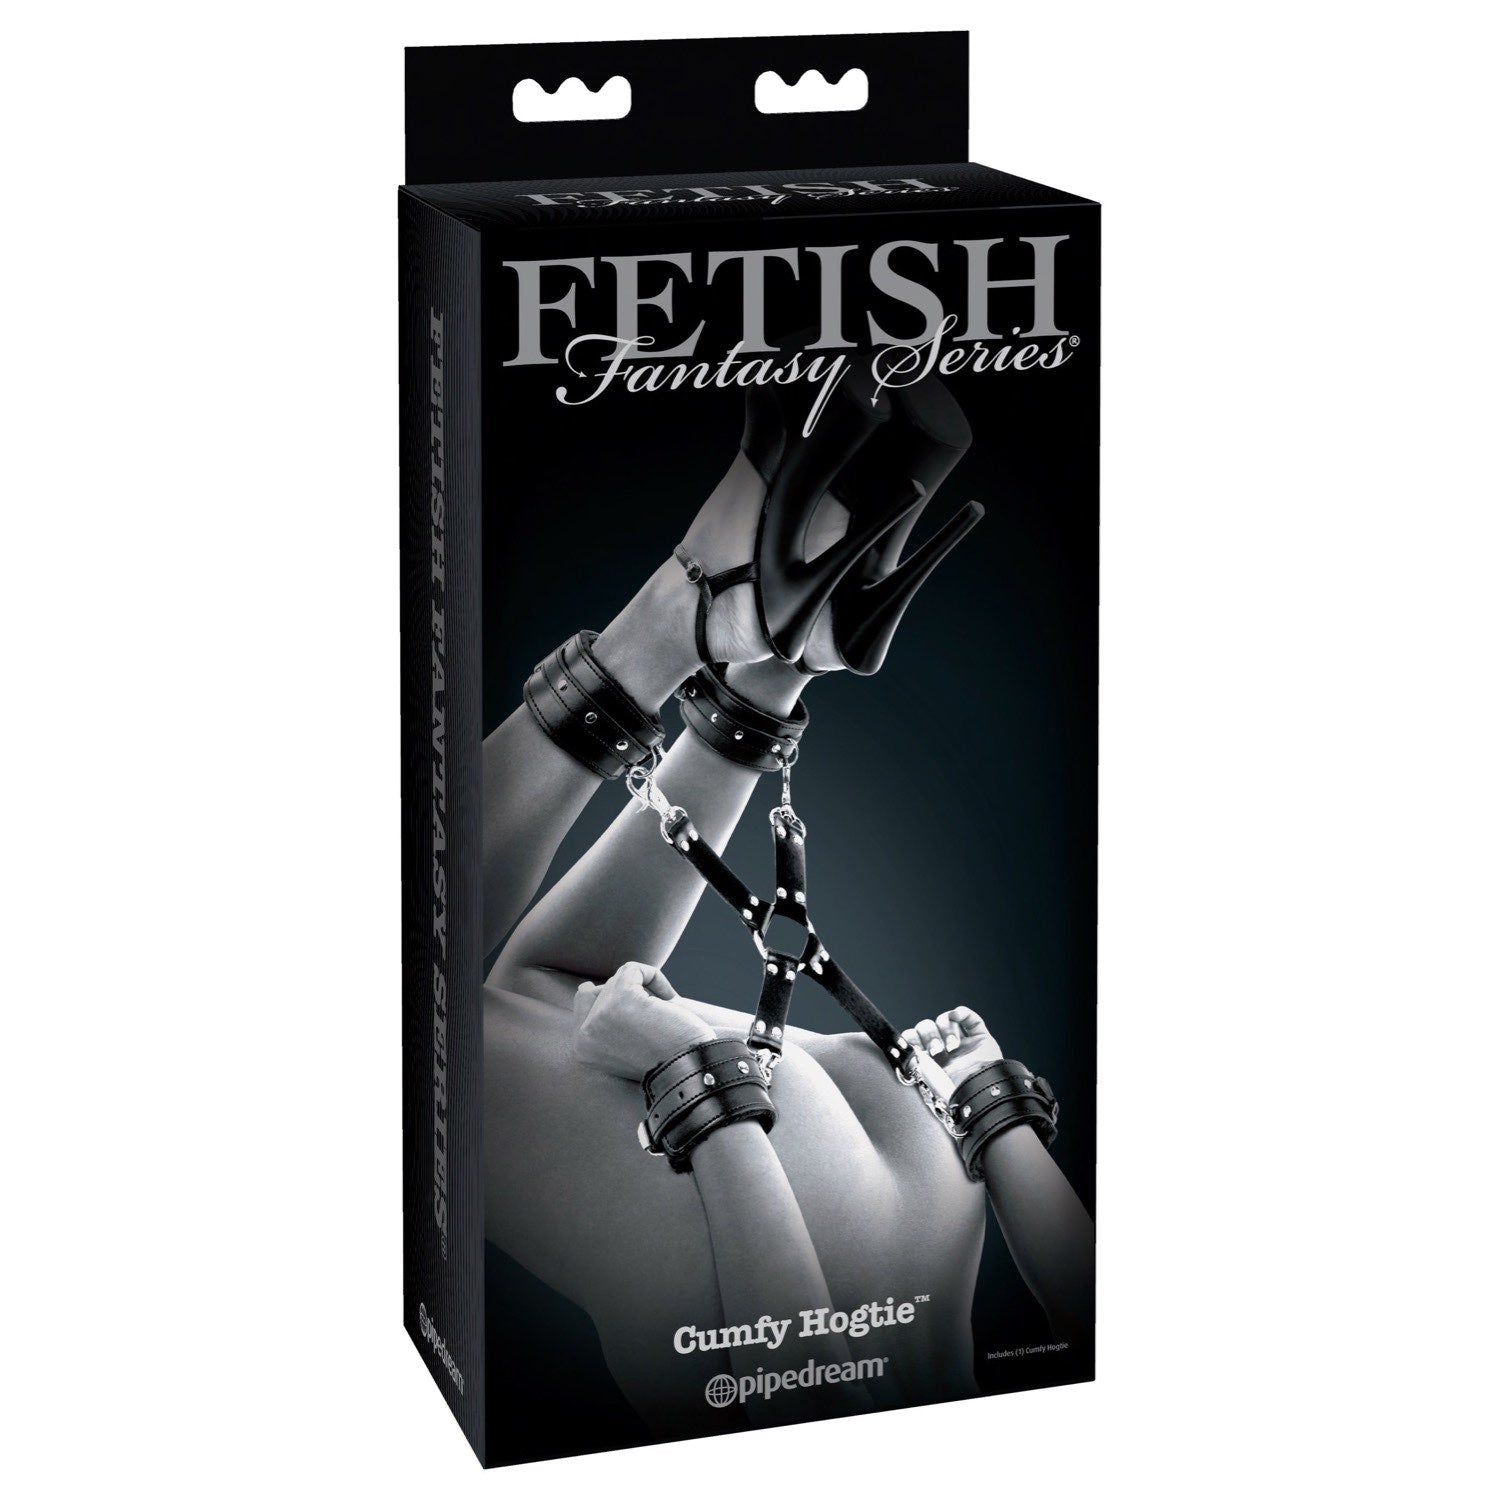 Fetish Fantasy Series Limited Edition Cumfy Hogtie - Black Hogtie Restraint by Pipedream